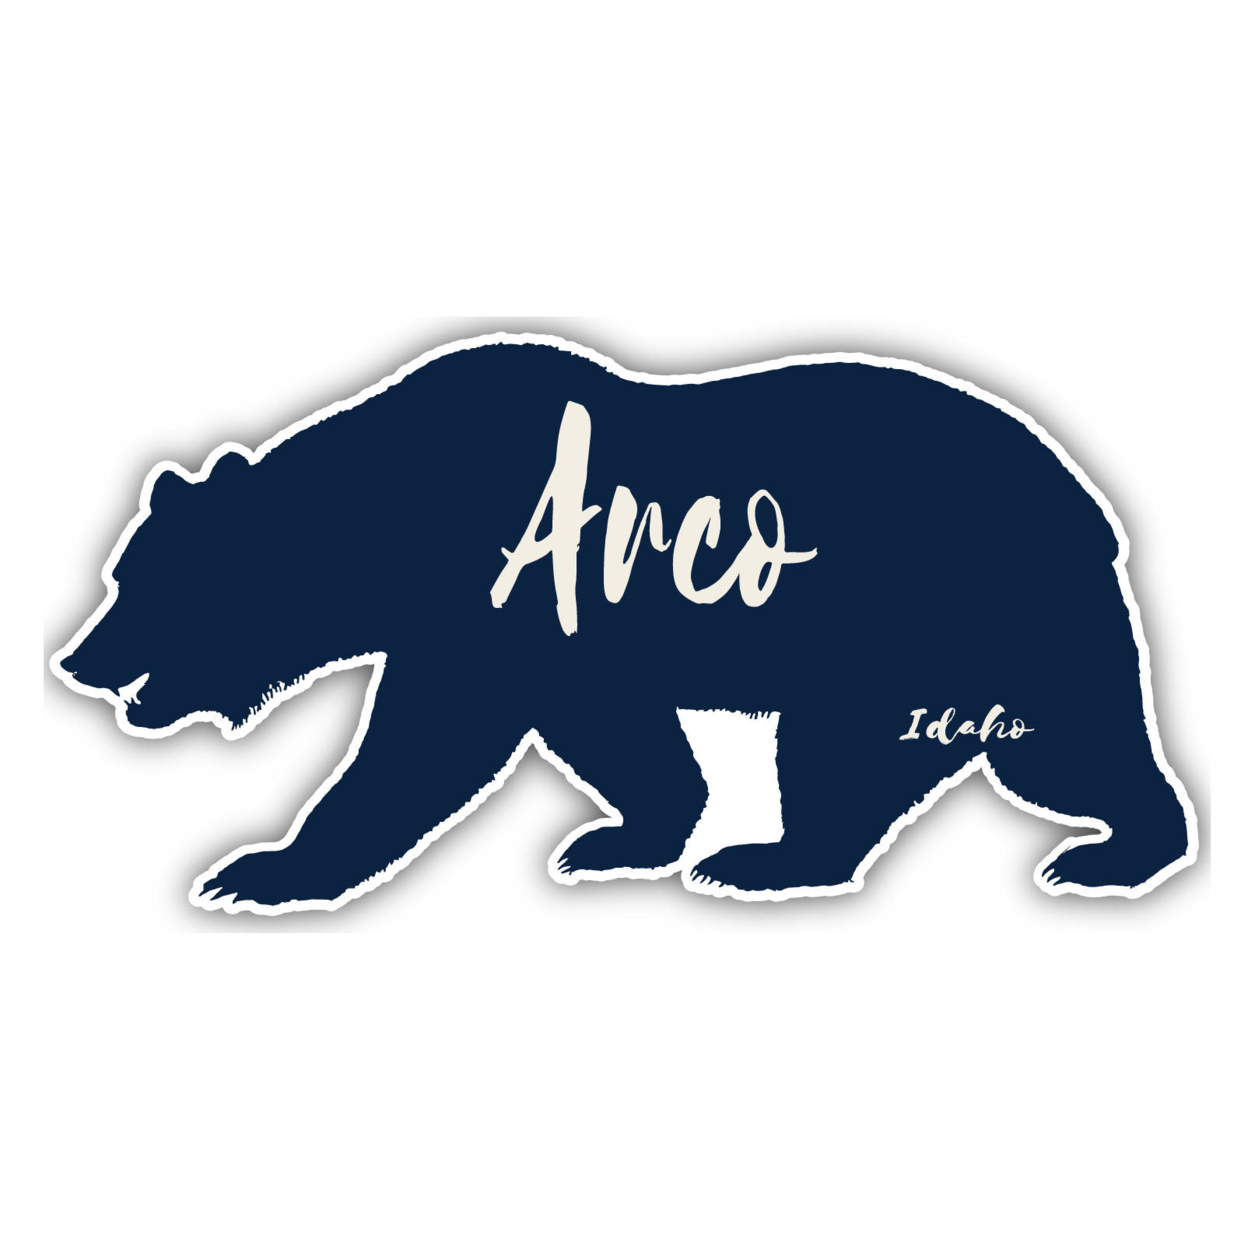 Arco Idaho Souvenir Decorative Stickers (Choose Theme And Size) - Single Unit, 4-Inch, Bear